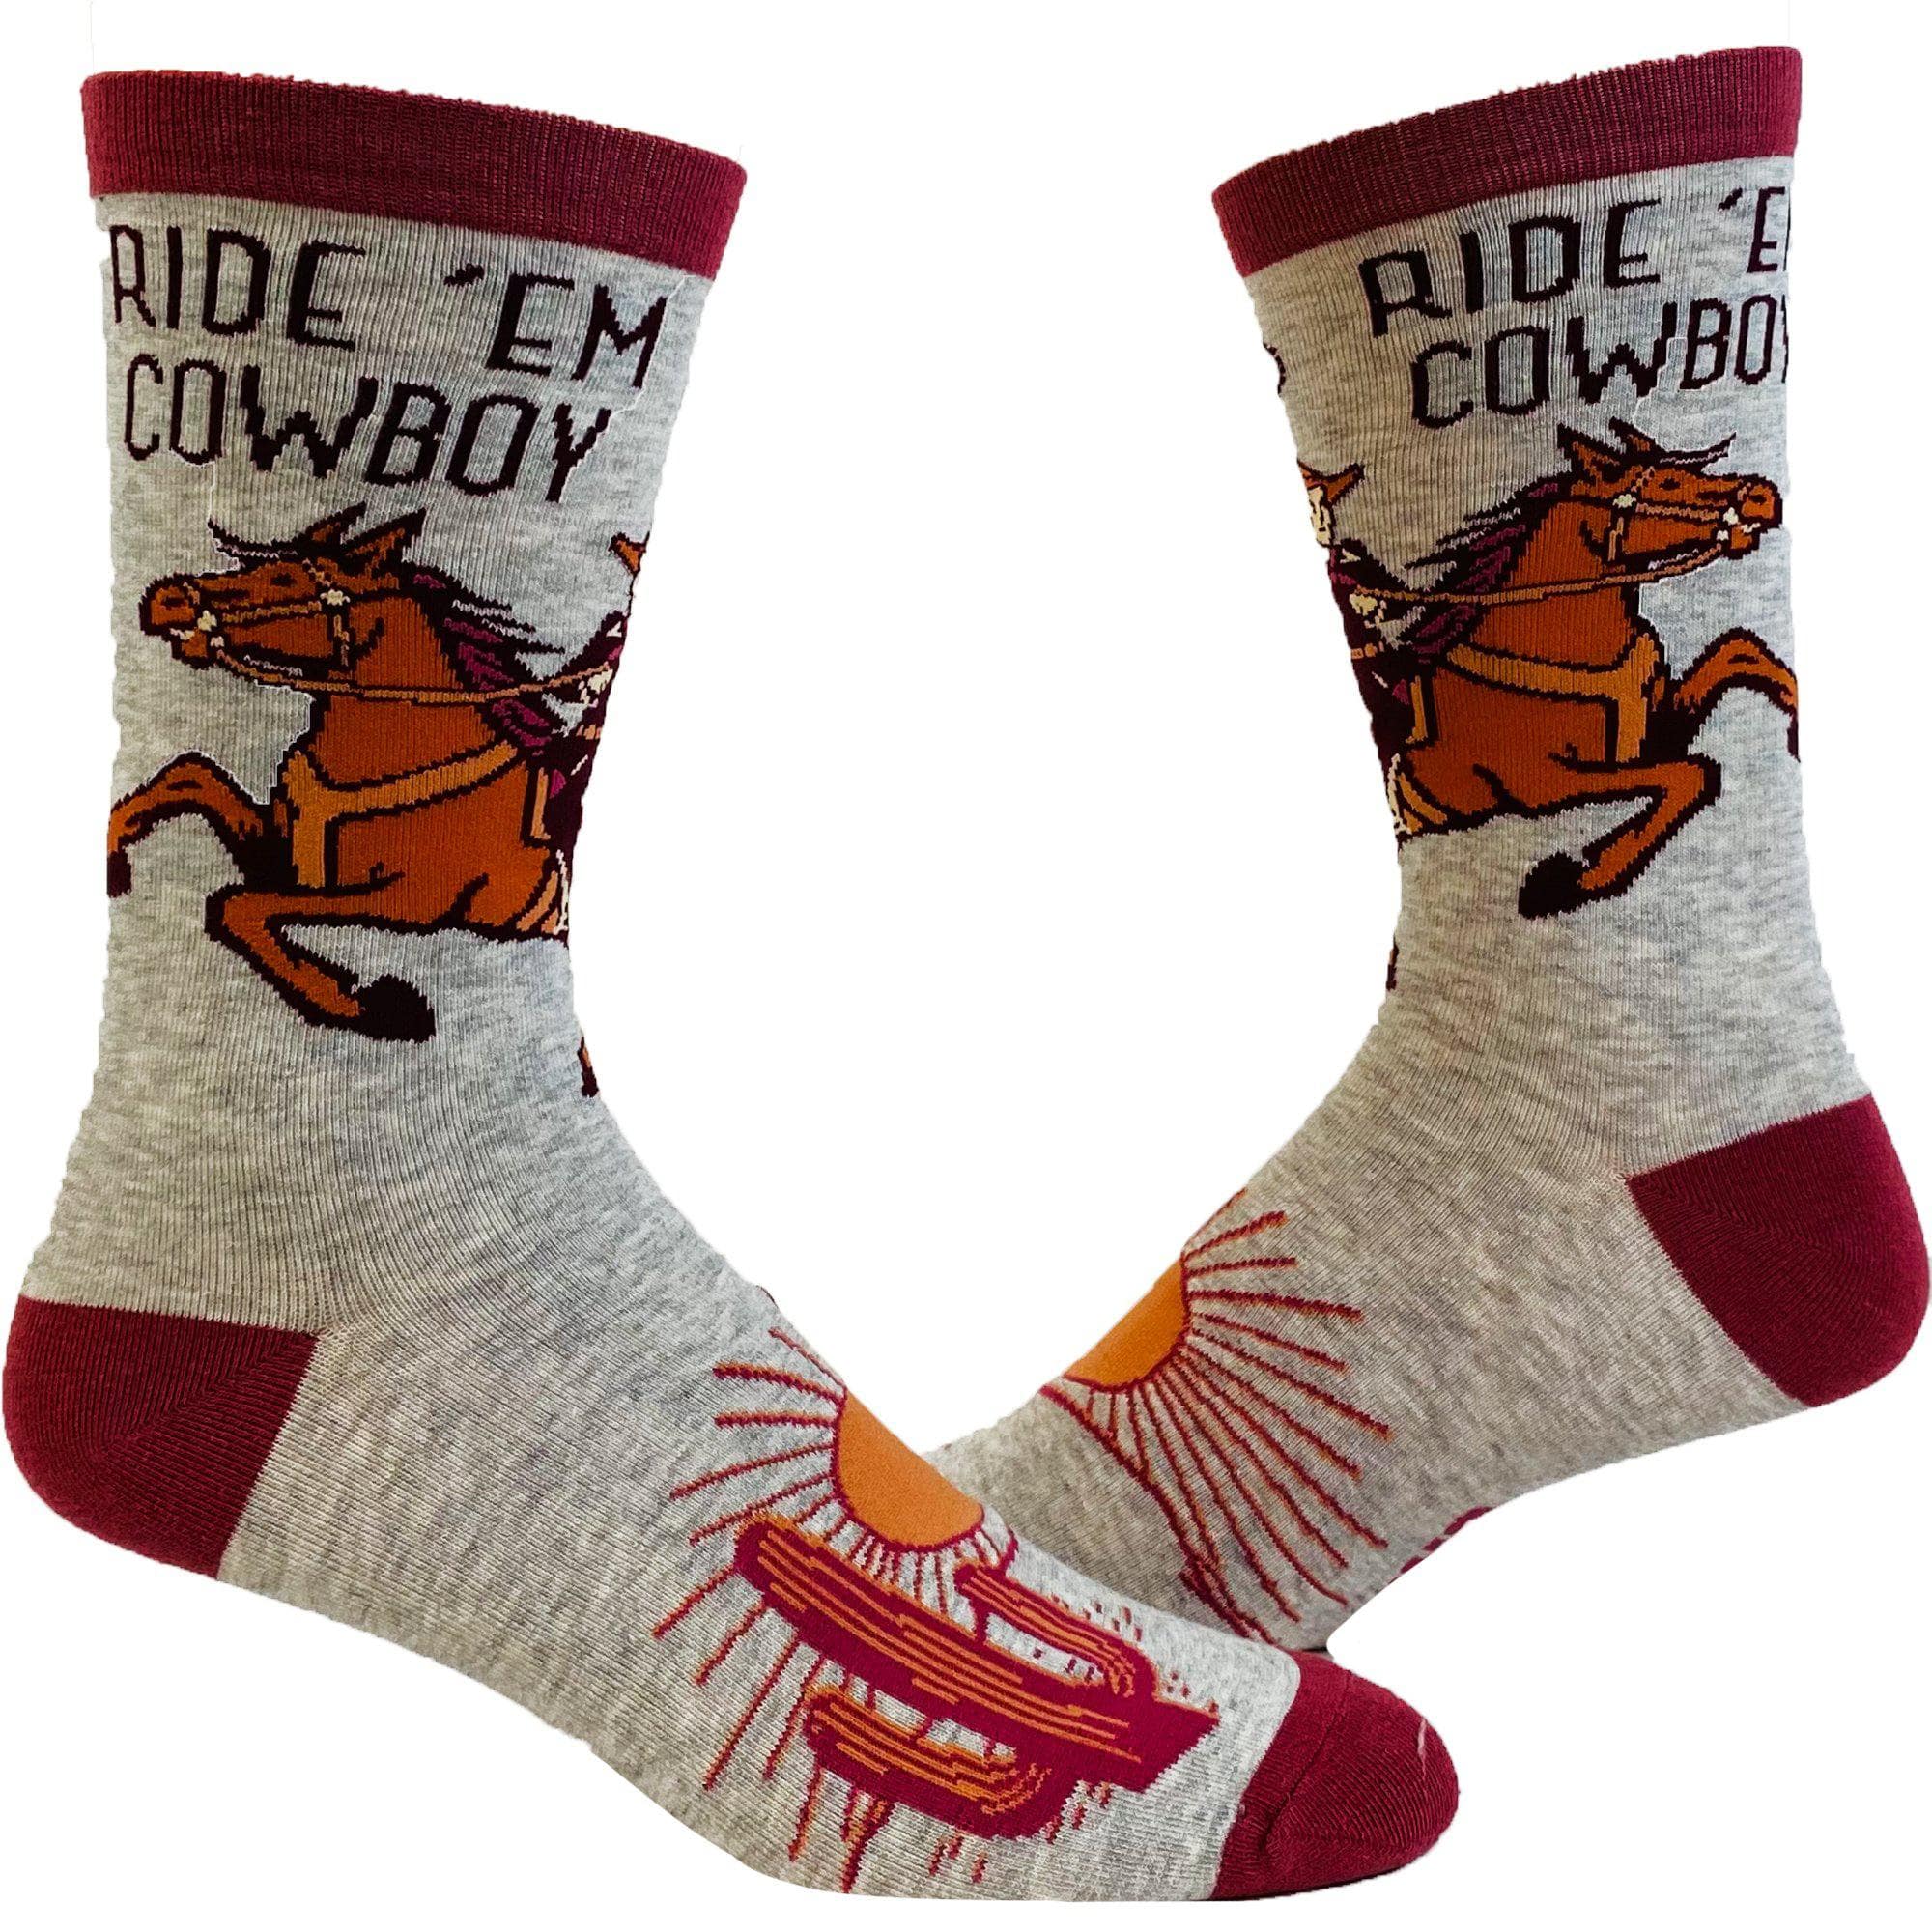 Men's Ride Em Cowboy Socks - Crazy Dog T-Shirts